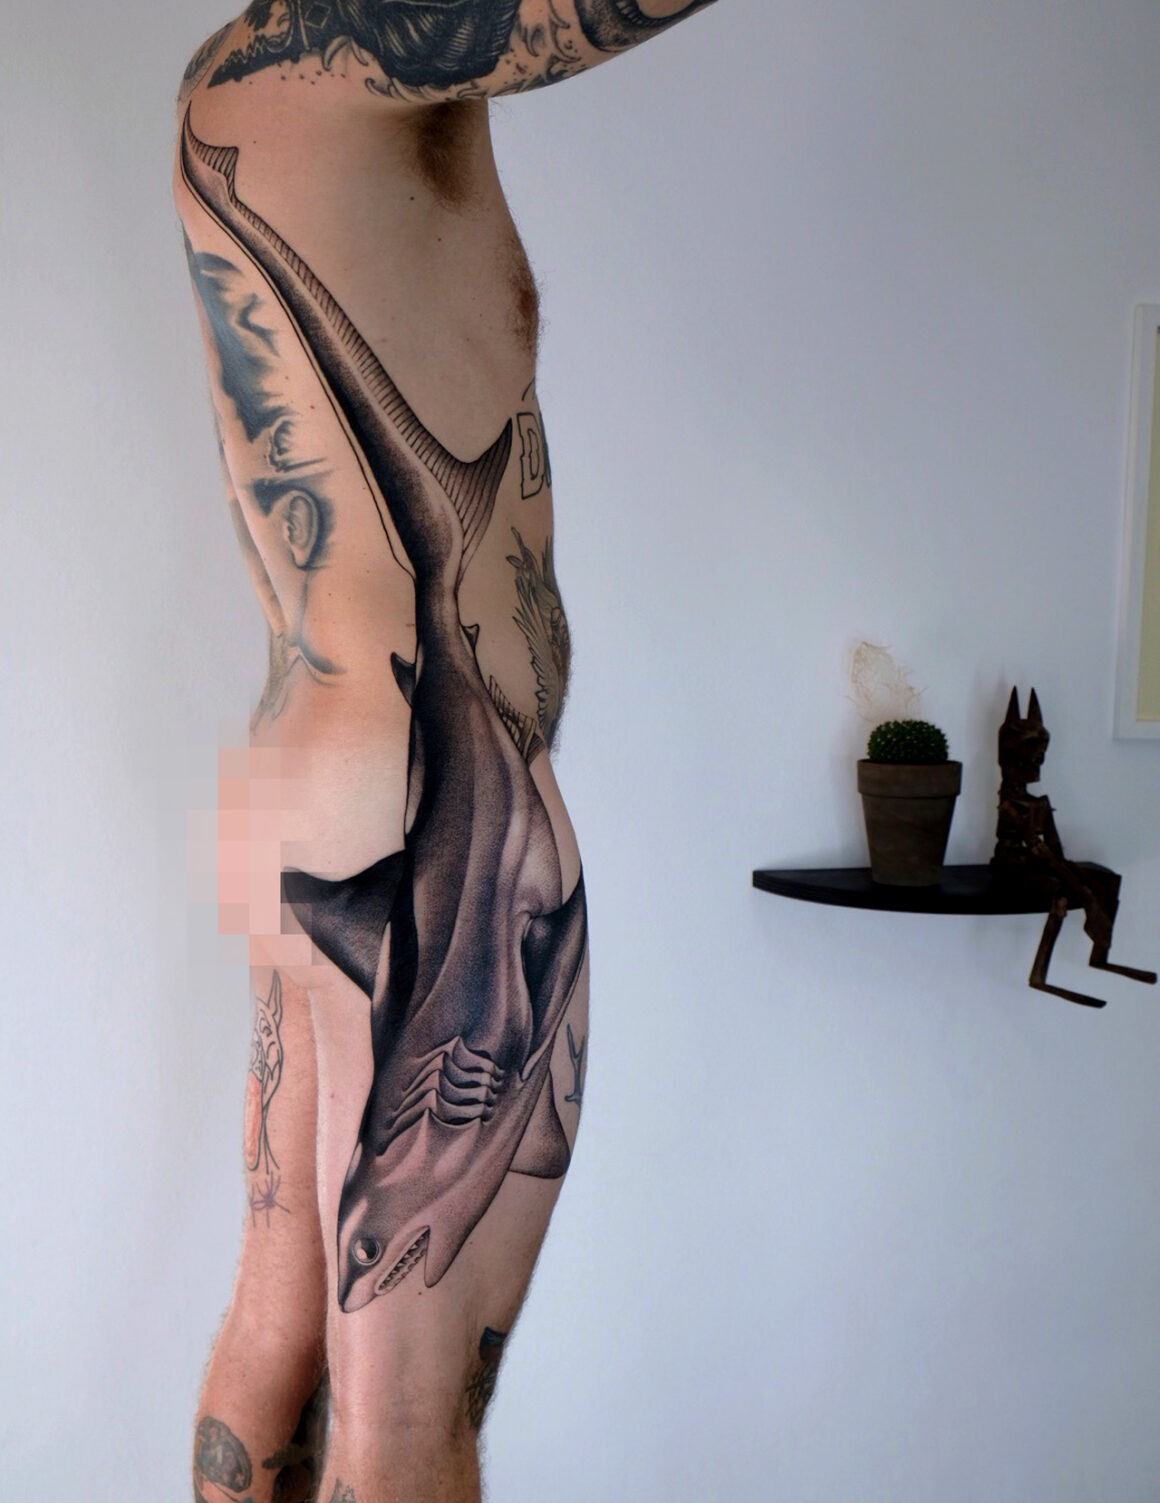 Tattoo by Stefano Oldrini, @stefano__oldrini